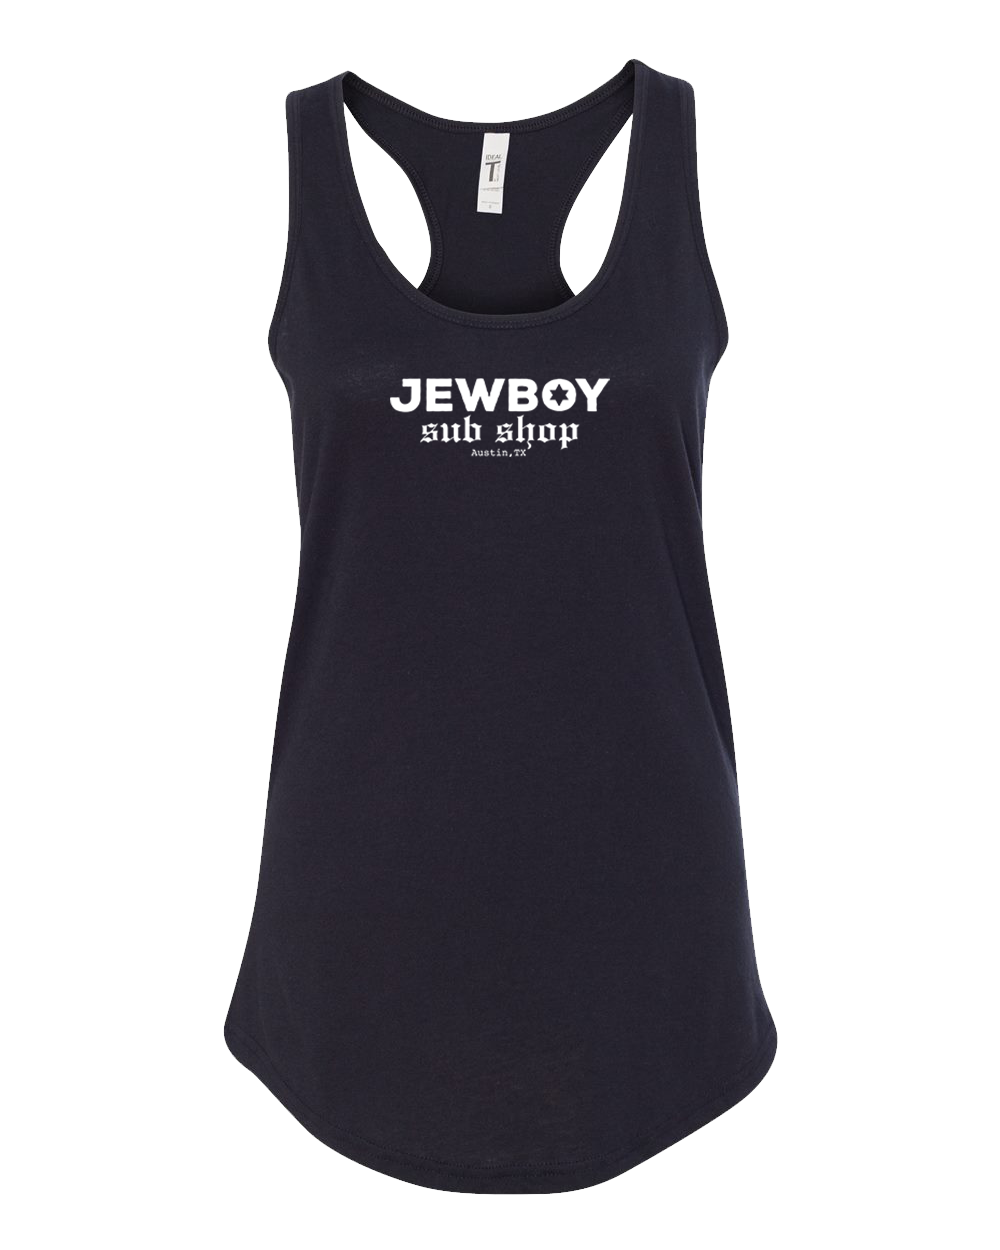 JewBoy Sub Shop Women's Tank Top